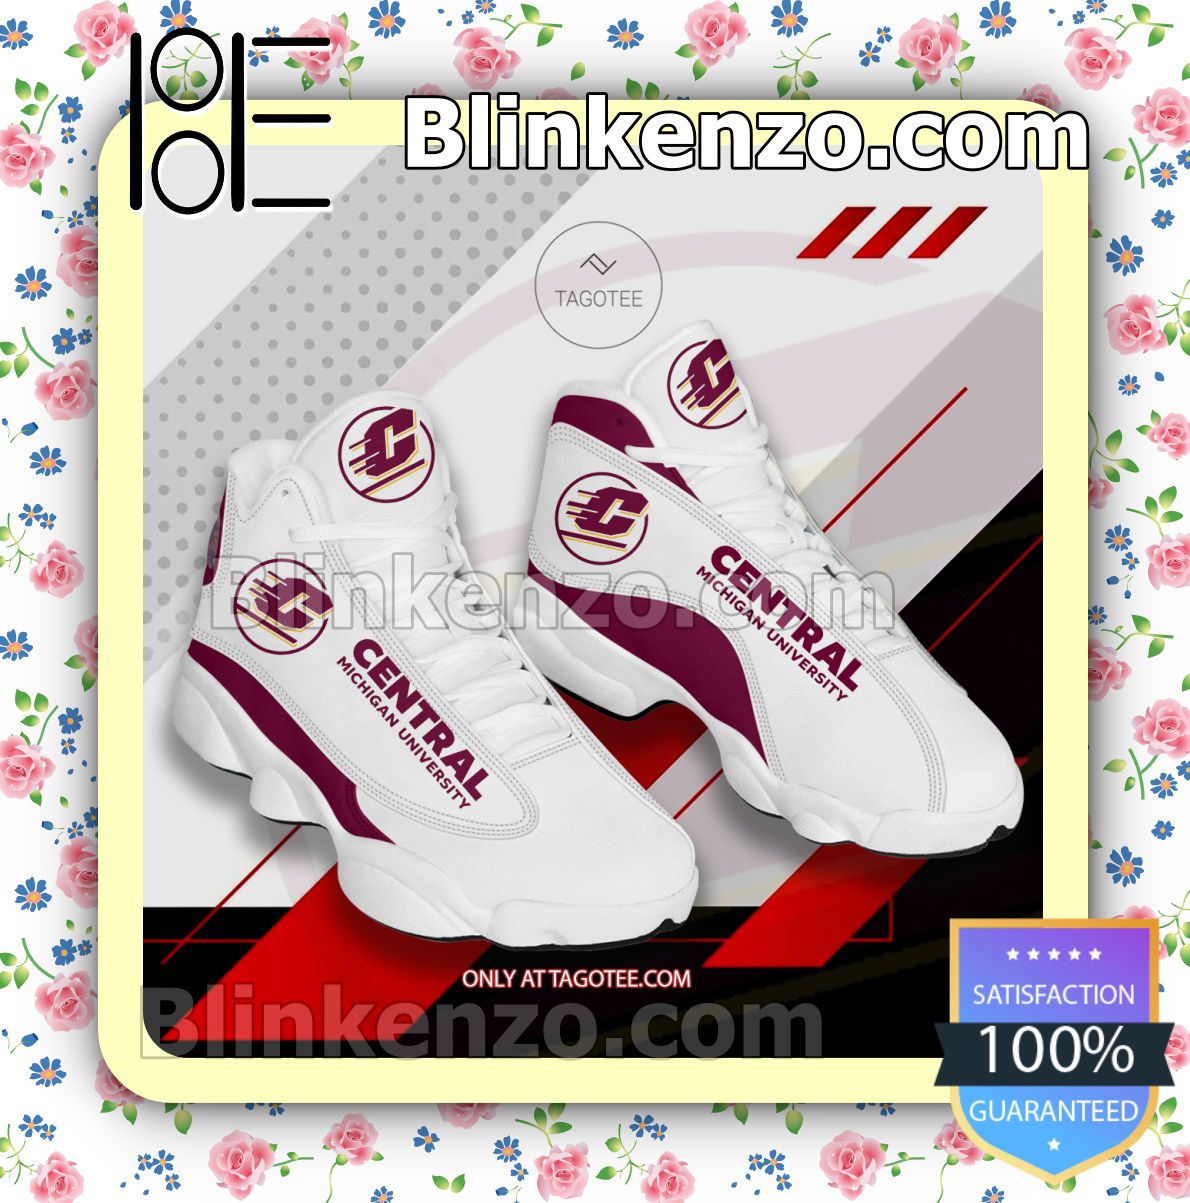 Louis Vuitton Lv White Brown Jordan Running Shoes - Blinkenzo